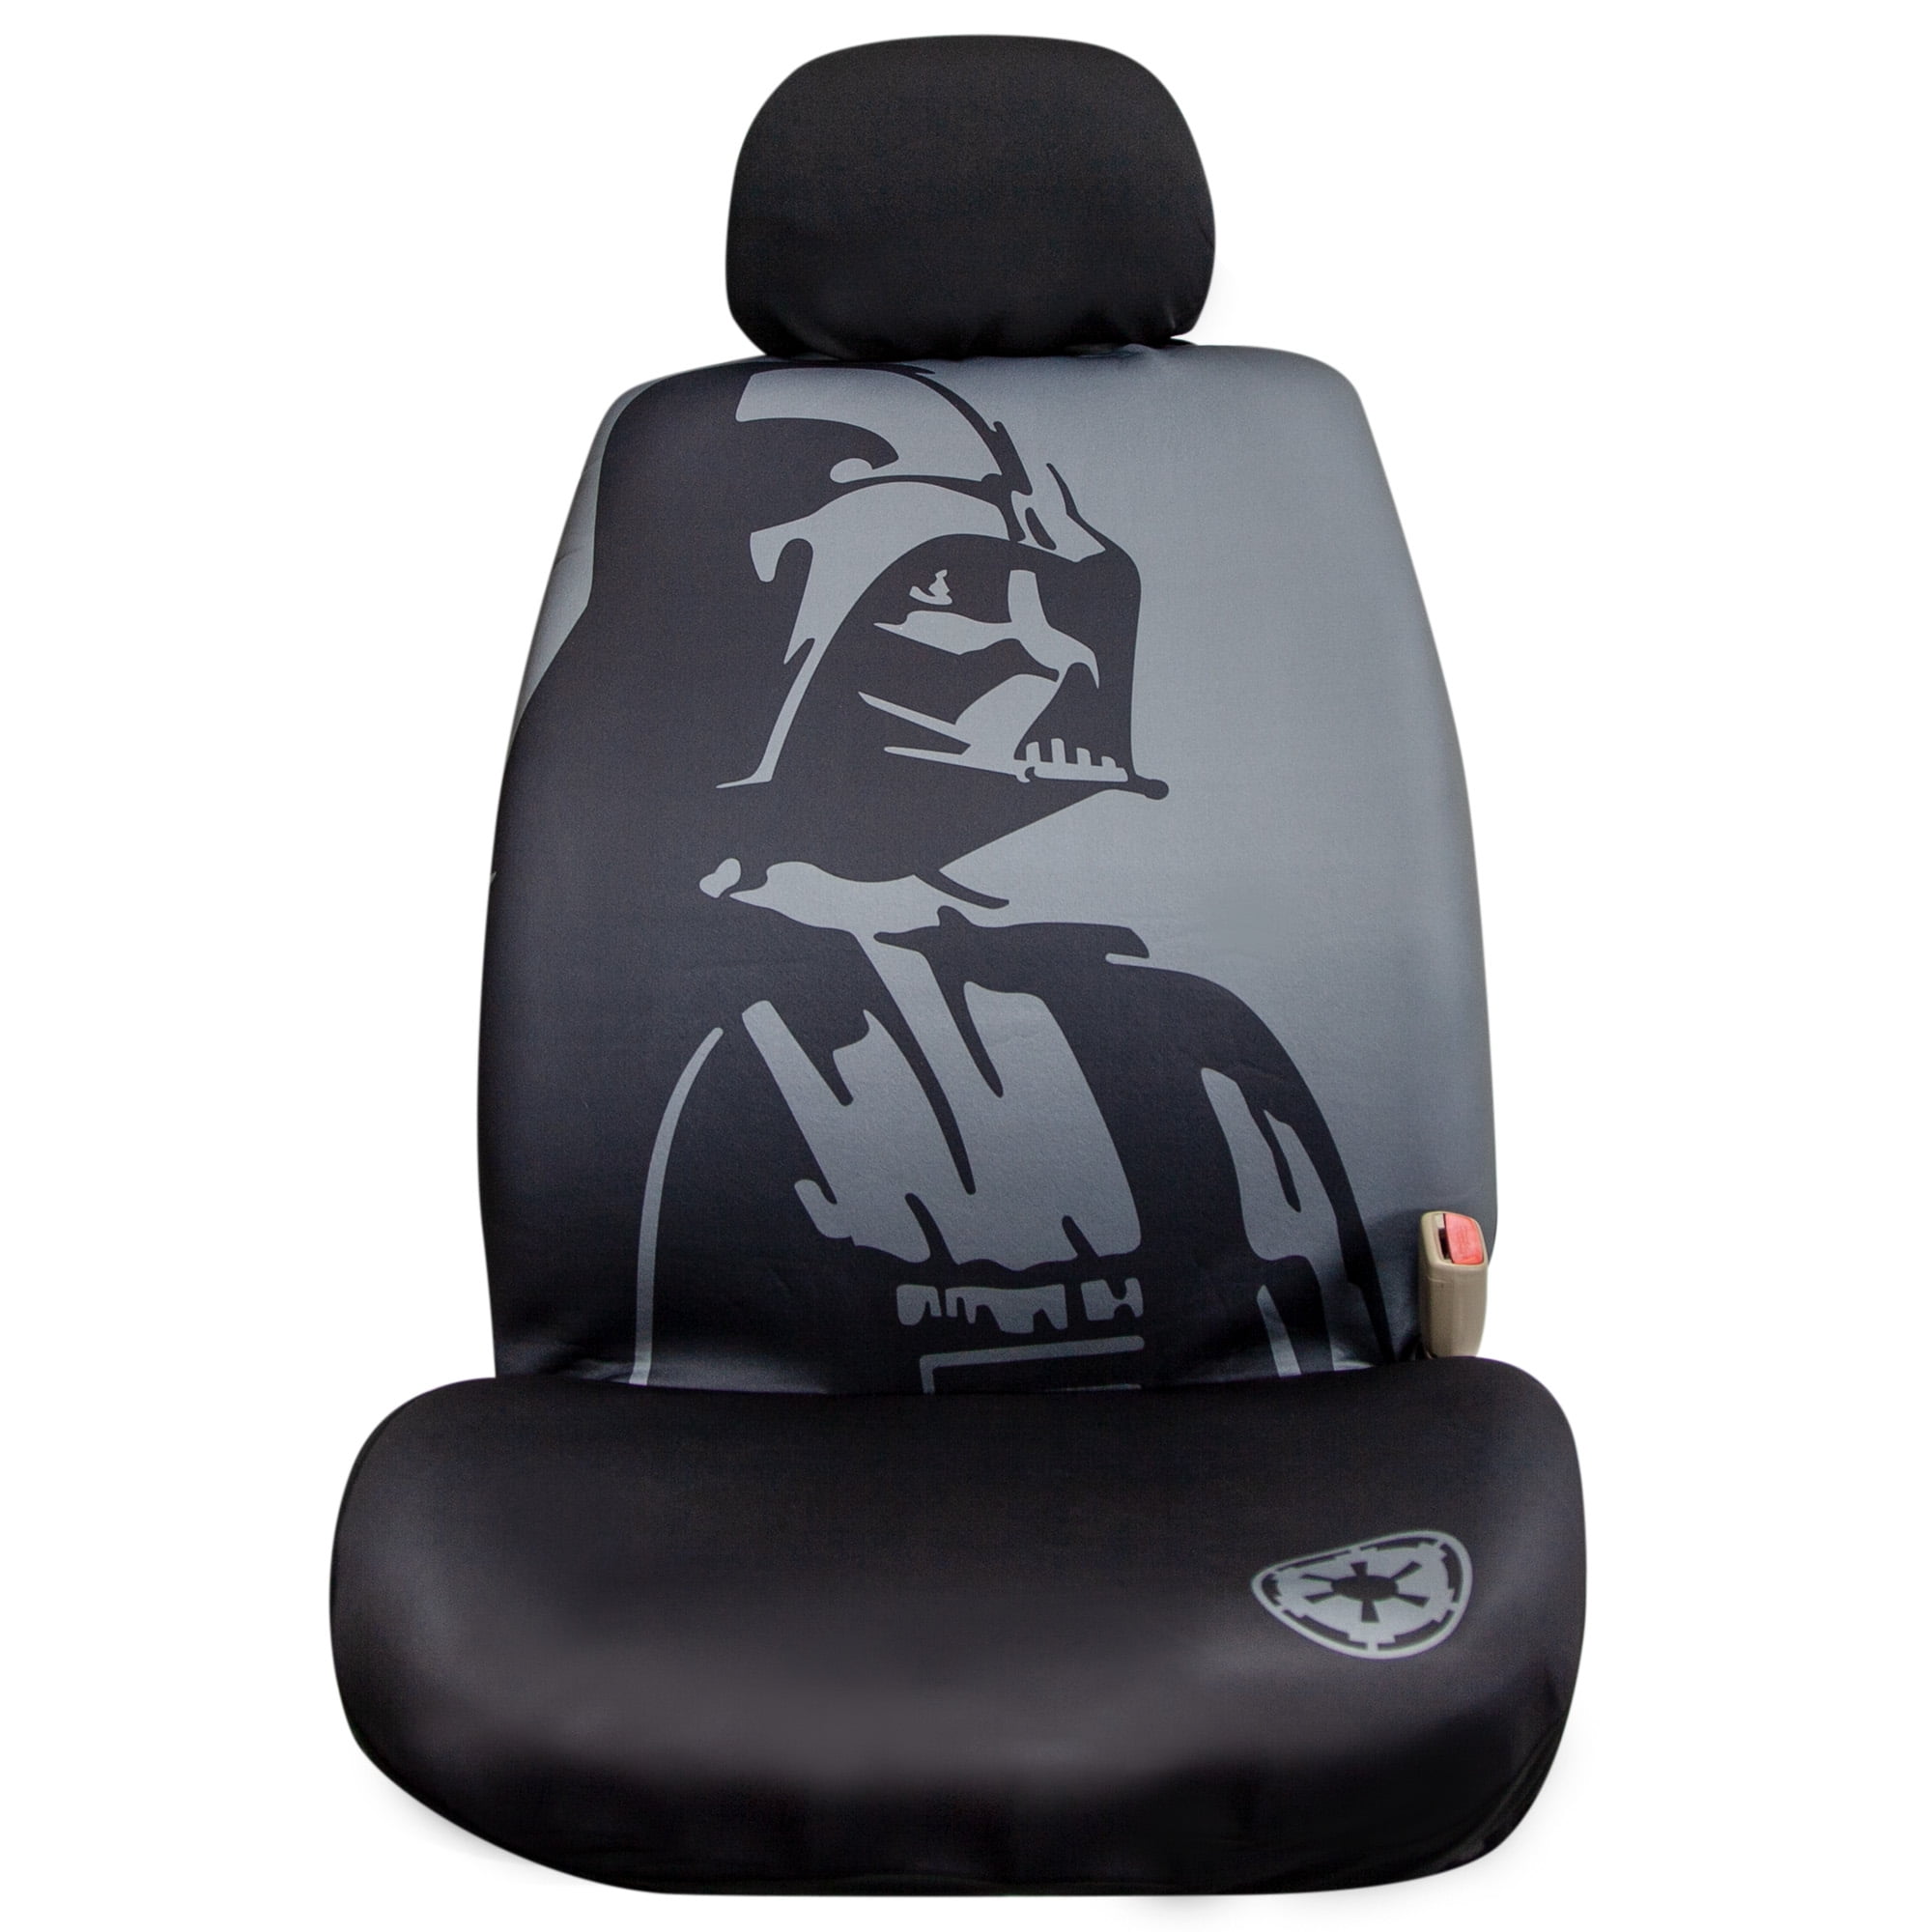 Star Wars Car Accessories: Floor Mats, Seat Covers, Steering Wheel